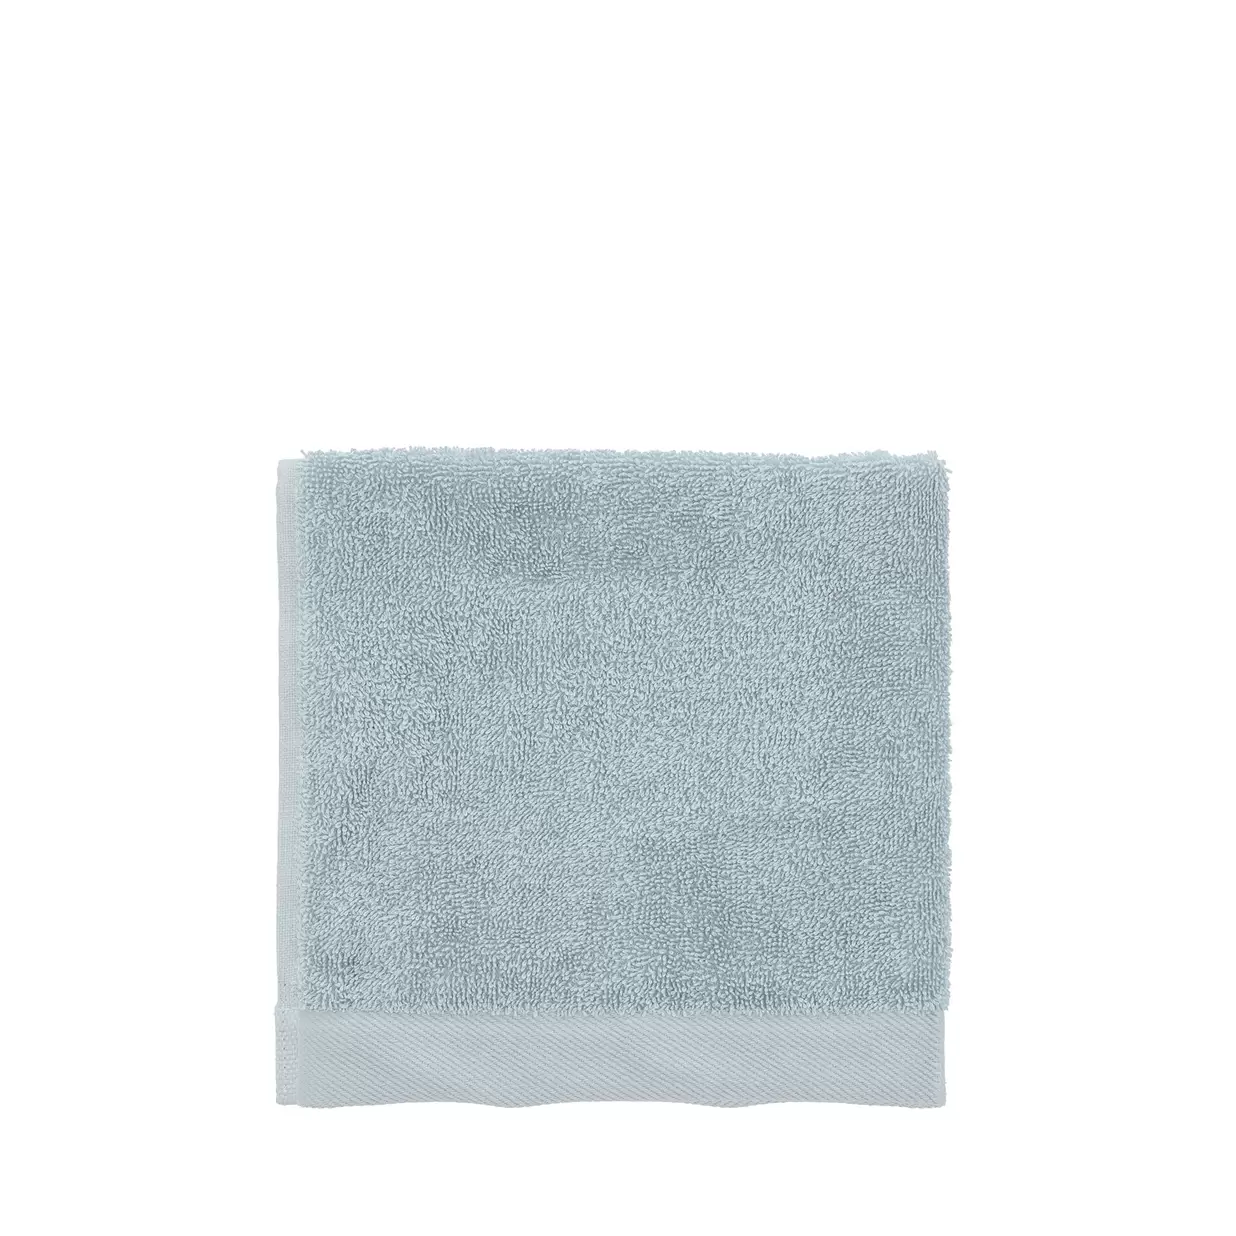 SÖDAHL Comfort håndklæde 40x60 cm linen blue på tilbud til 59,95 kr. hos Sinnerup